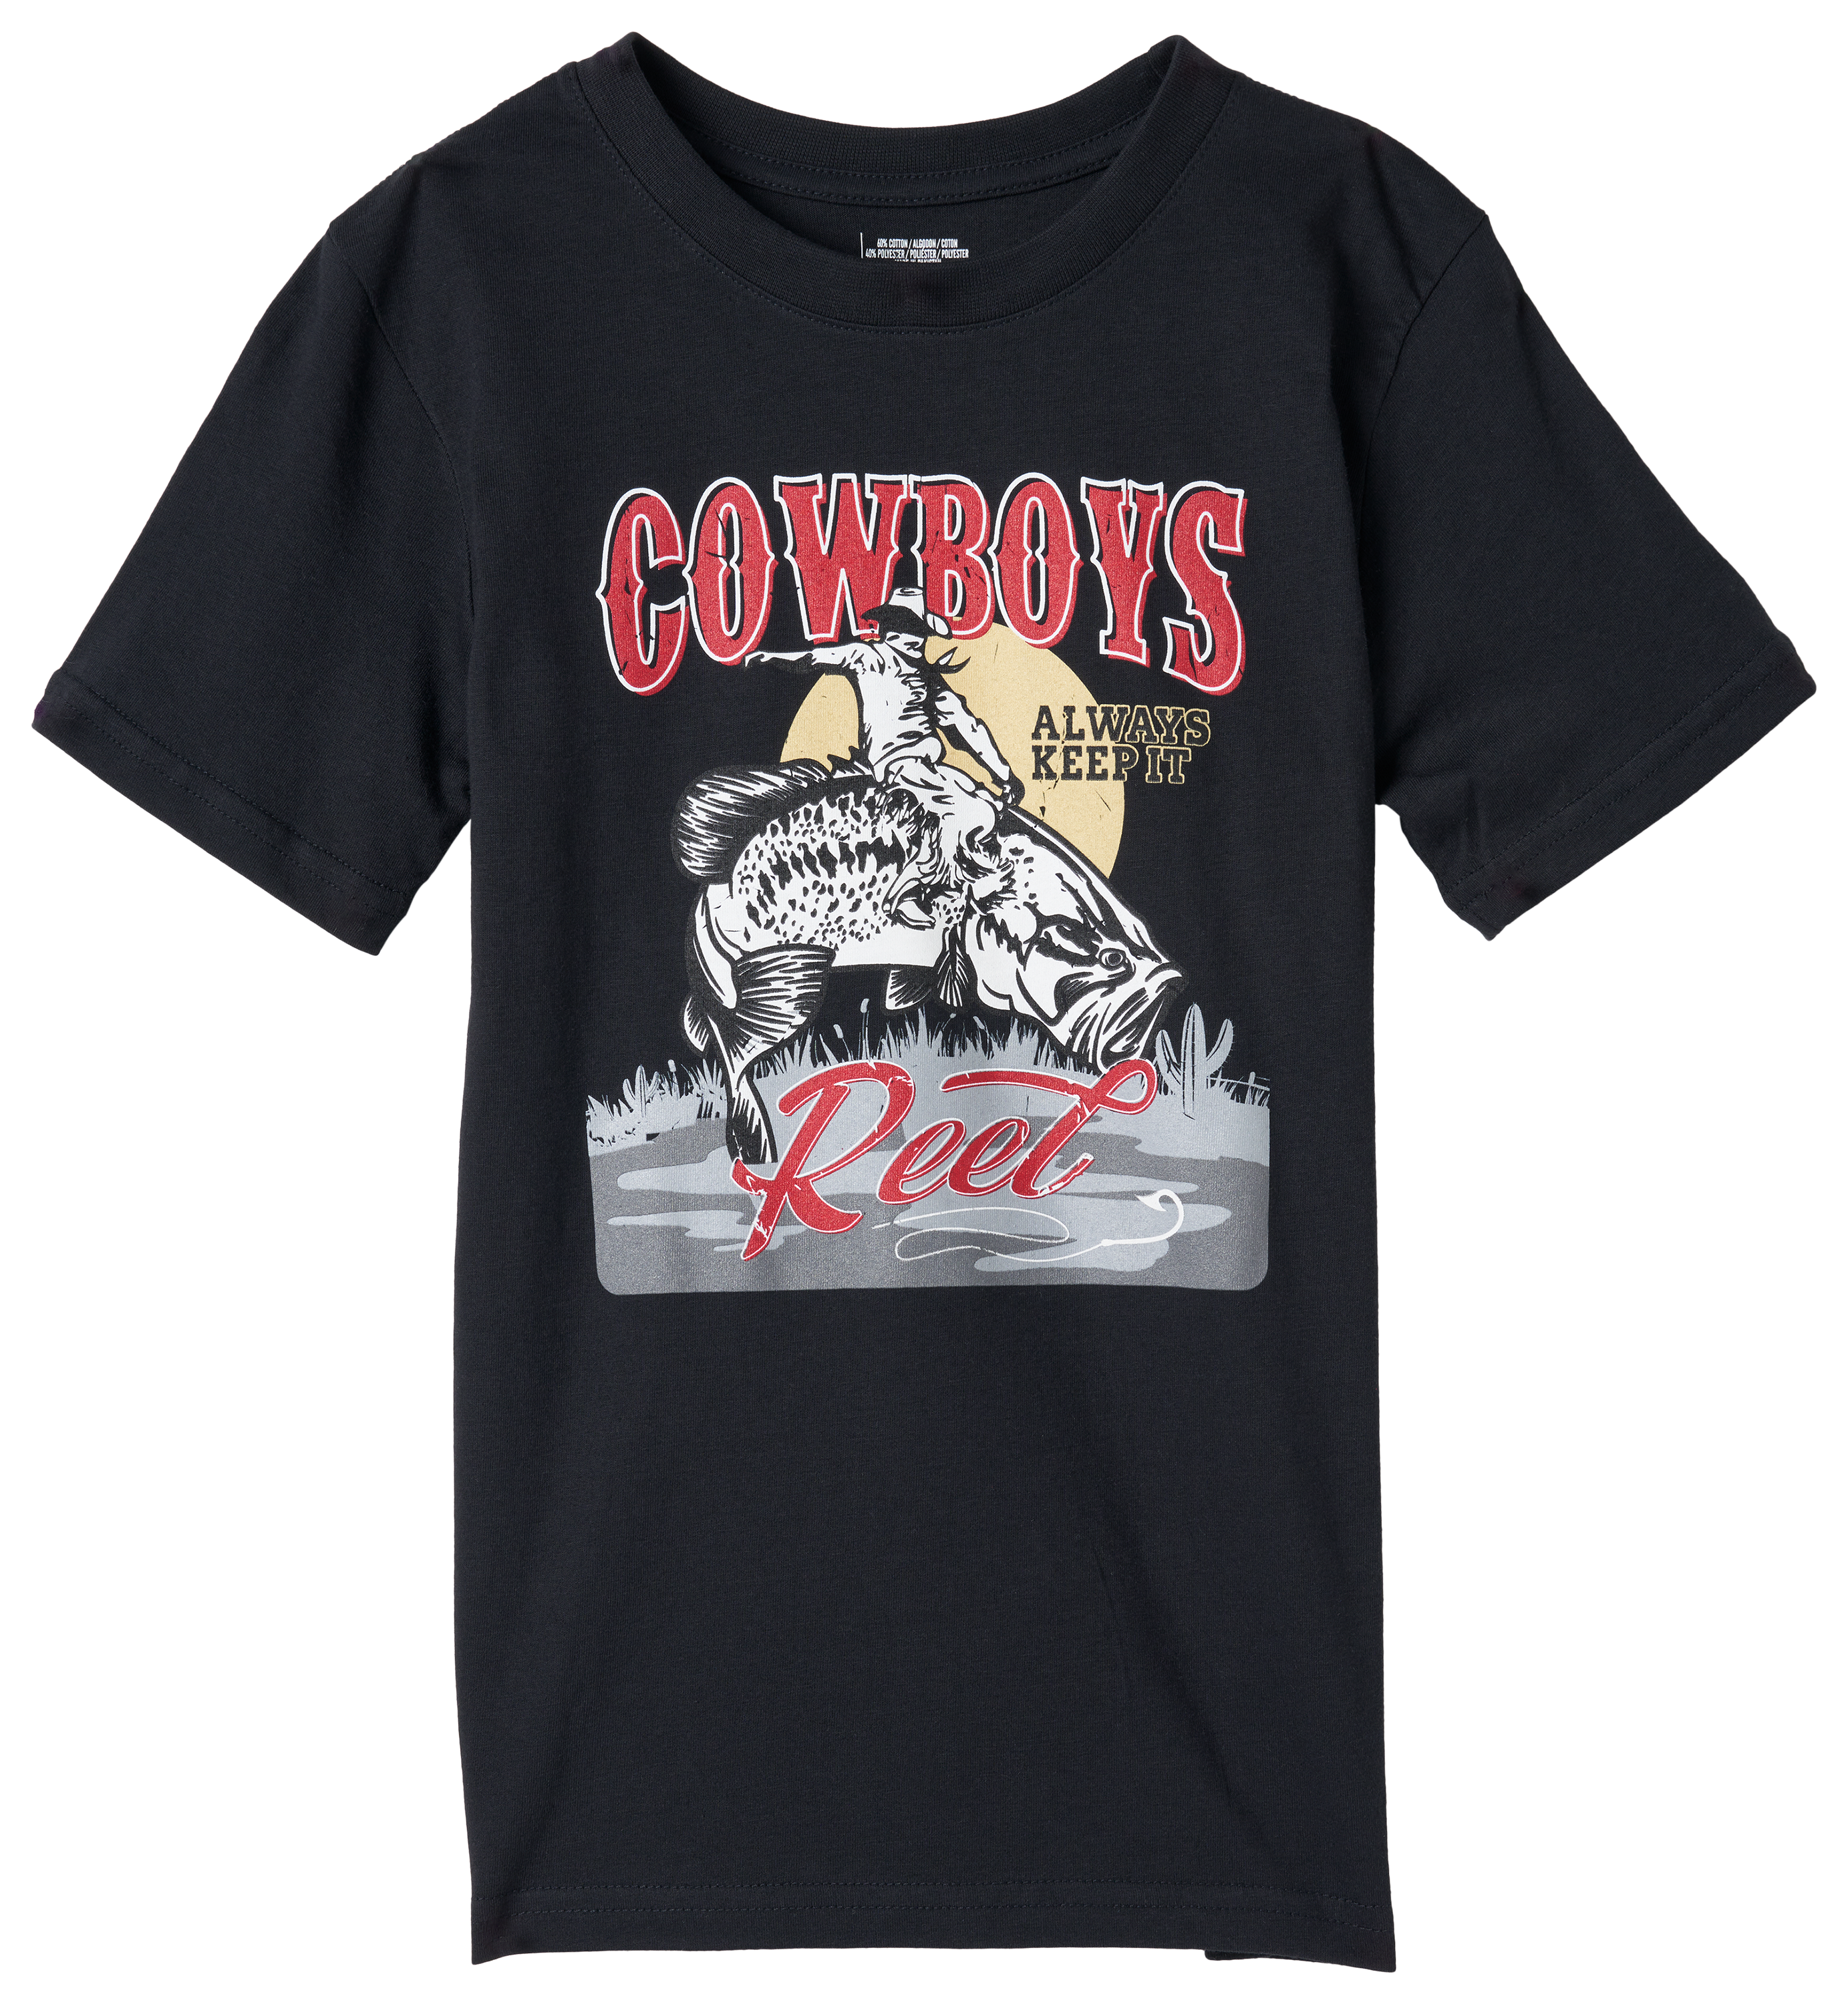 Bass Pro Shops Cowboys Keep It Reel Short-Sleeve T-Shirt for Kids - Black - XL